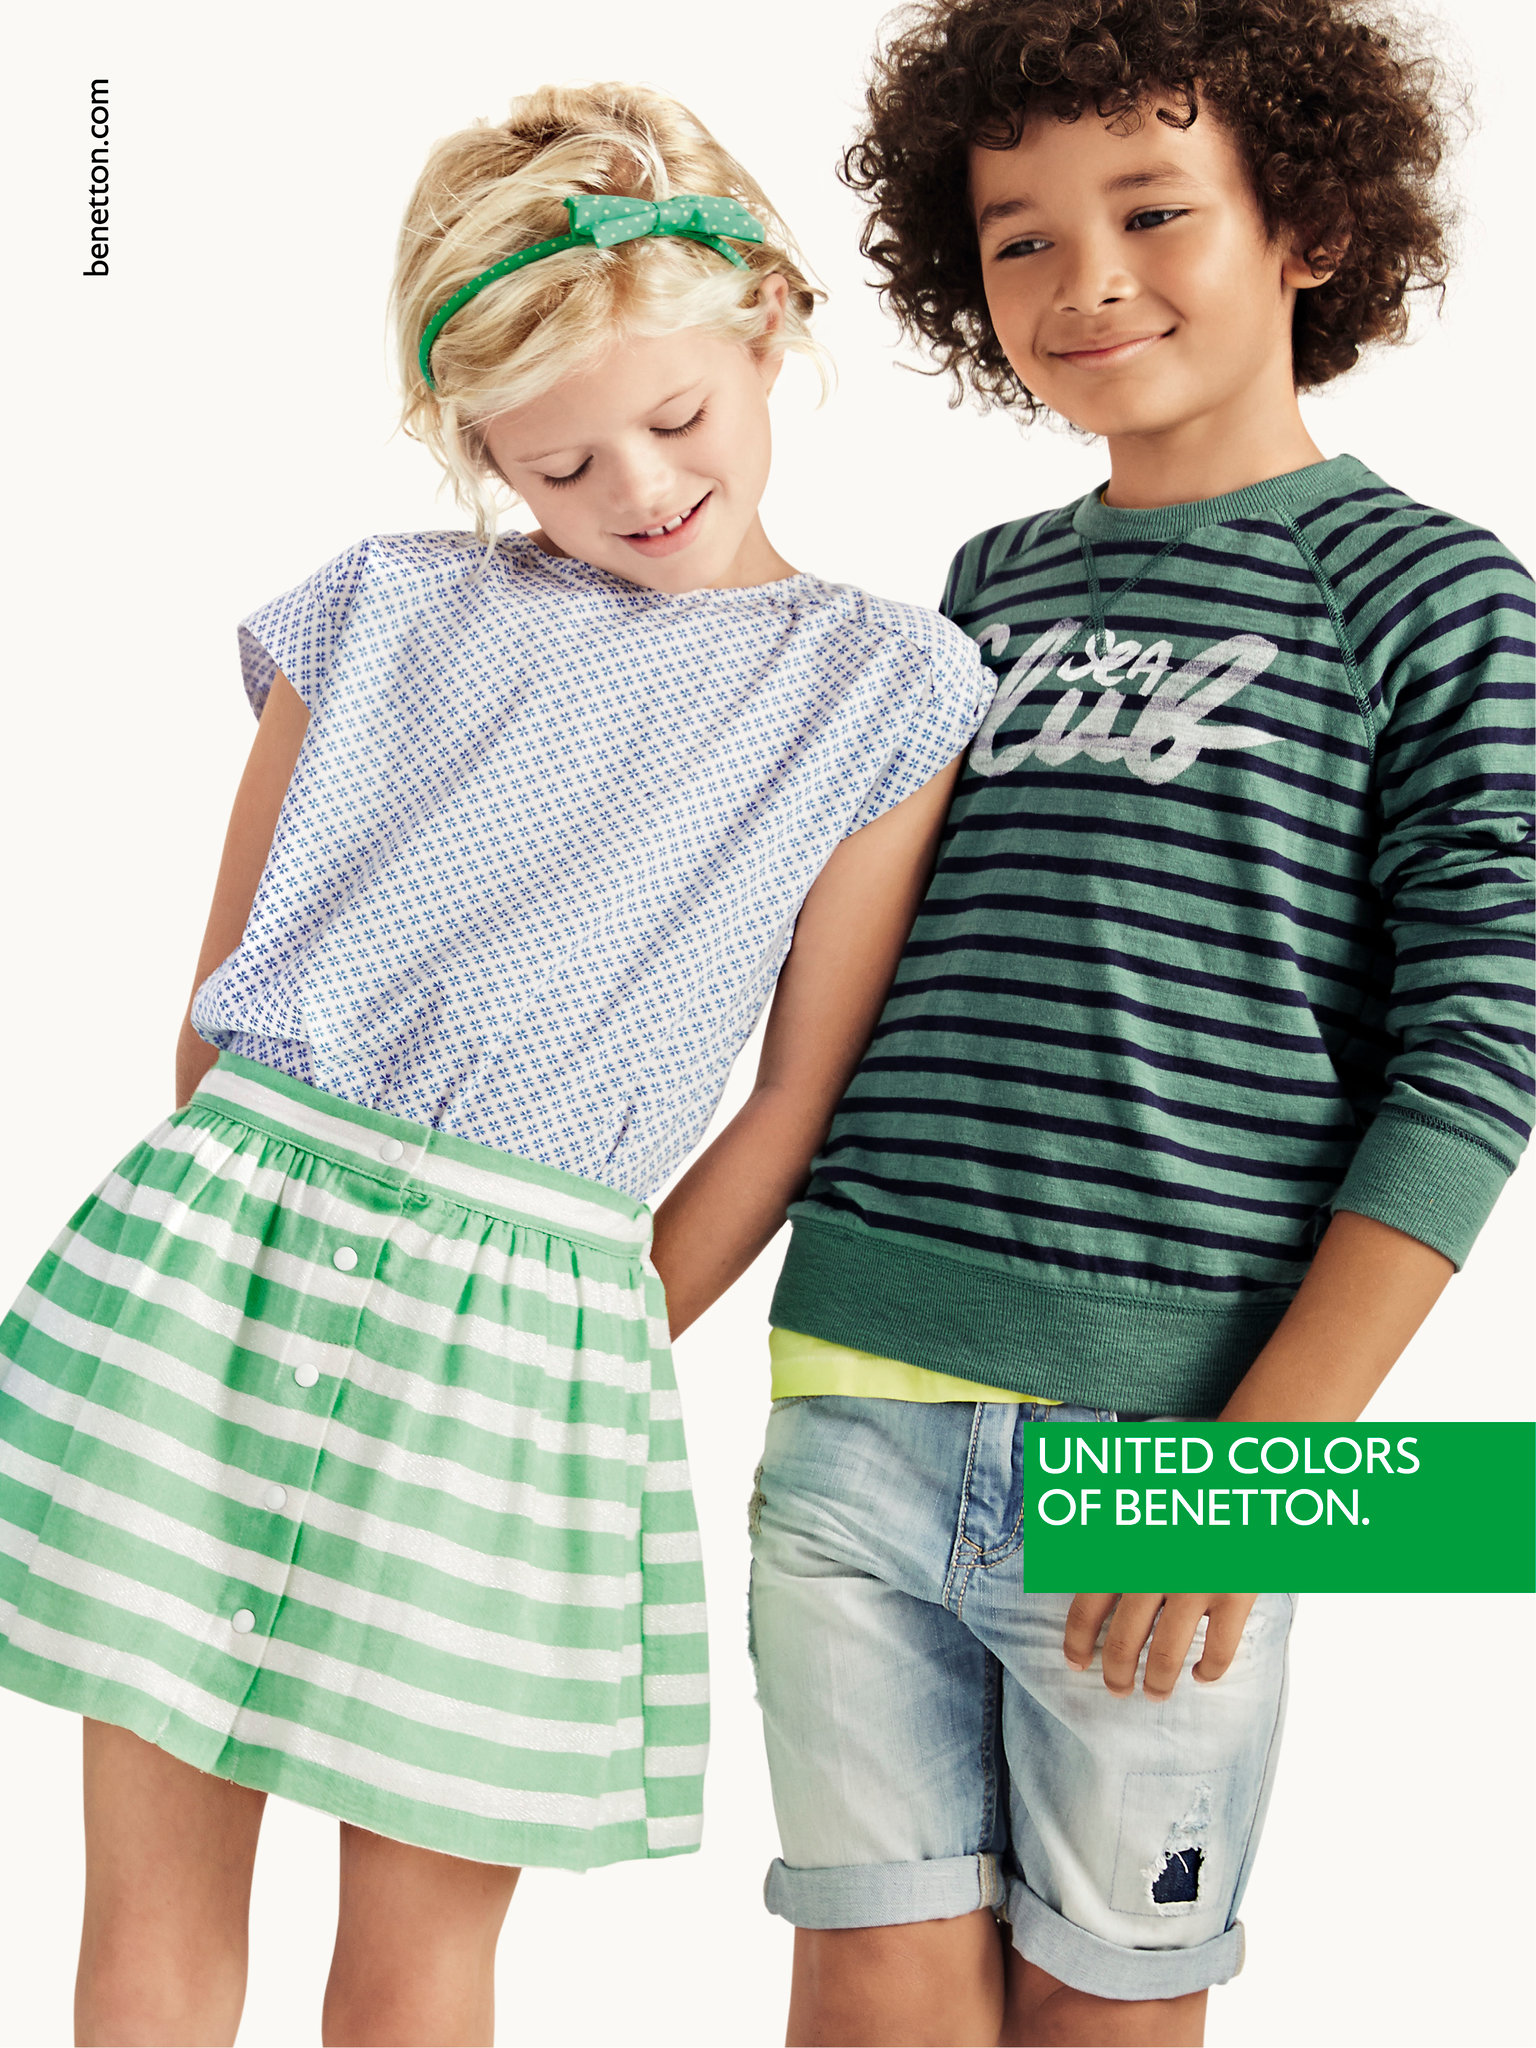 Benetton детская одежда